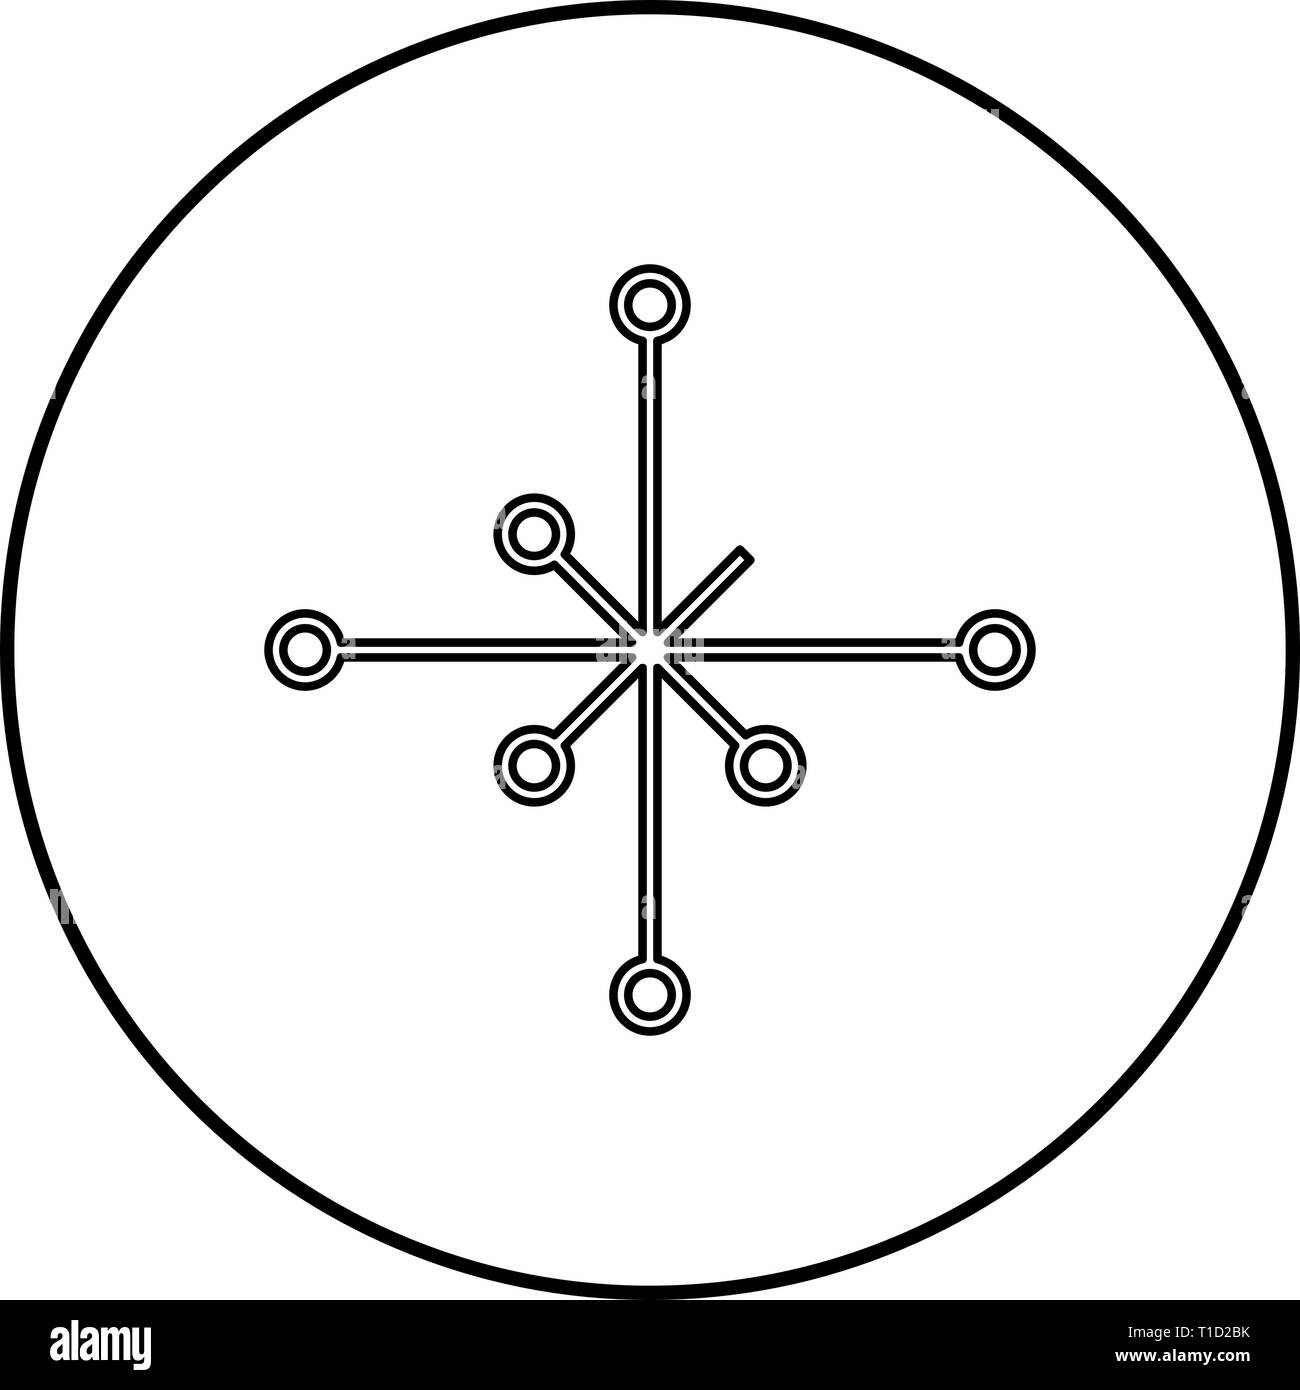 Helm of awe aegishjalmur or egishjalmur galdrastav icon outline black color vector in circle round illustration flat style simple image Stock Vector